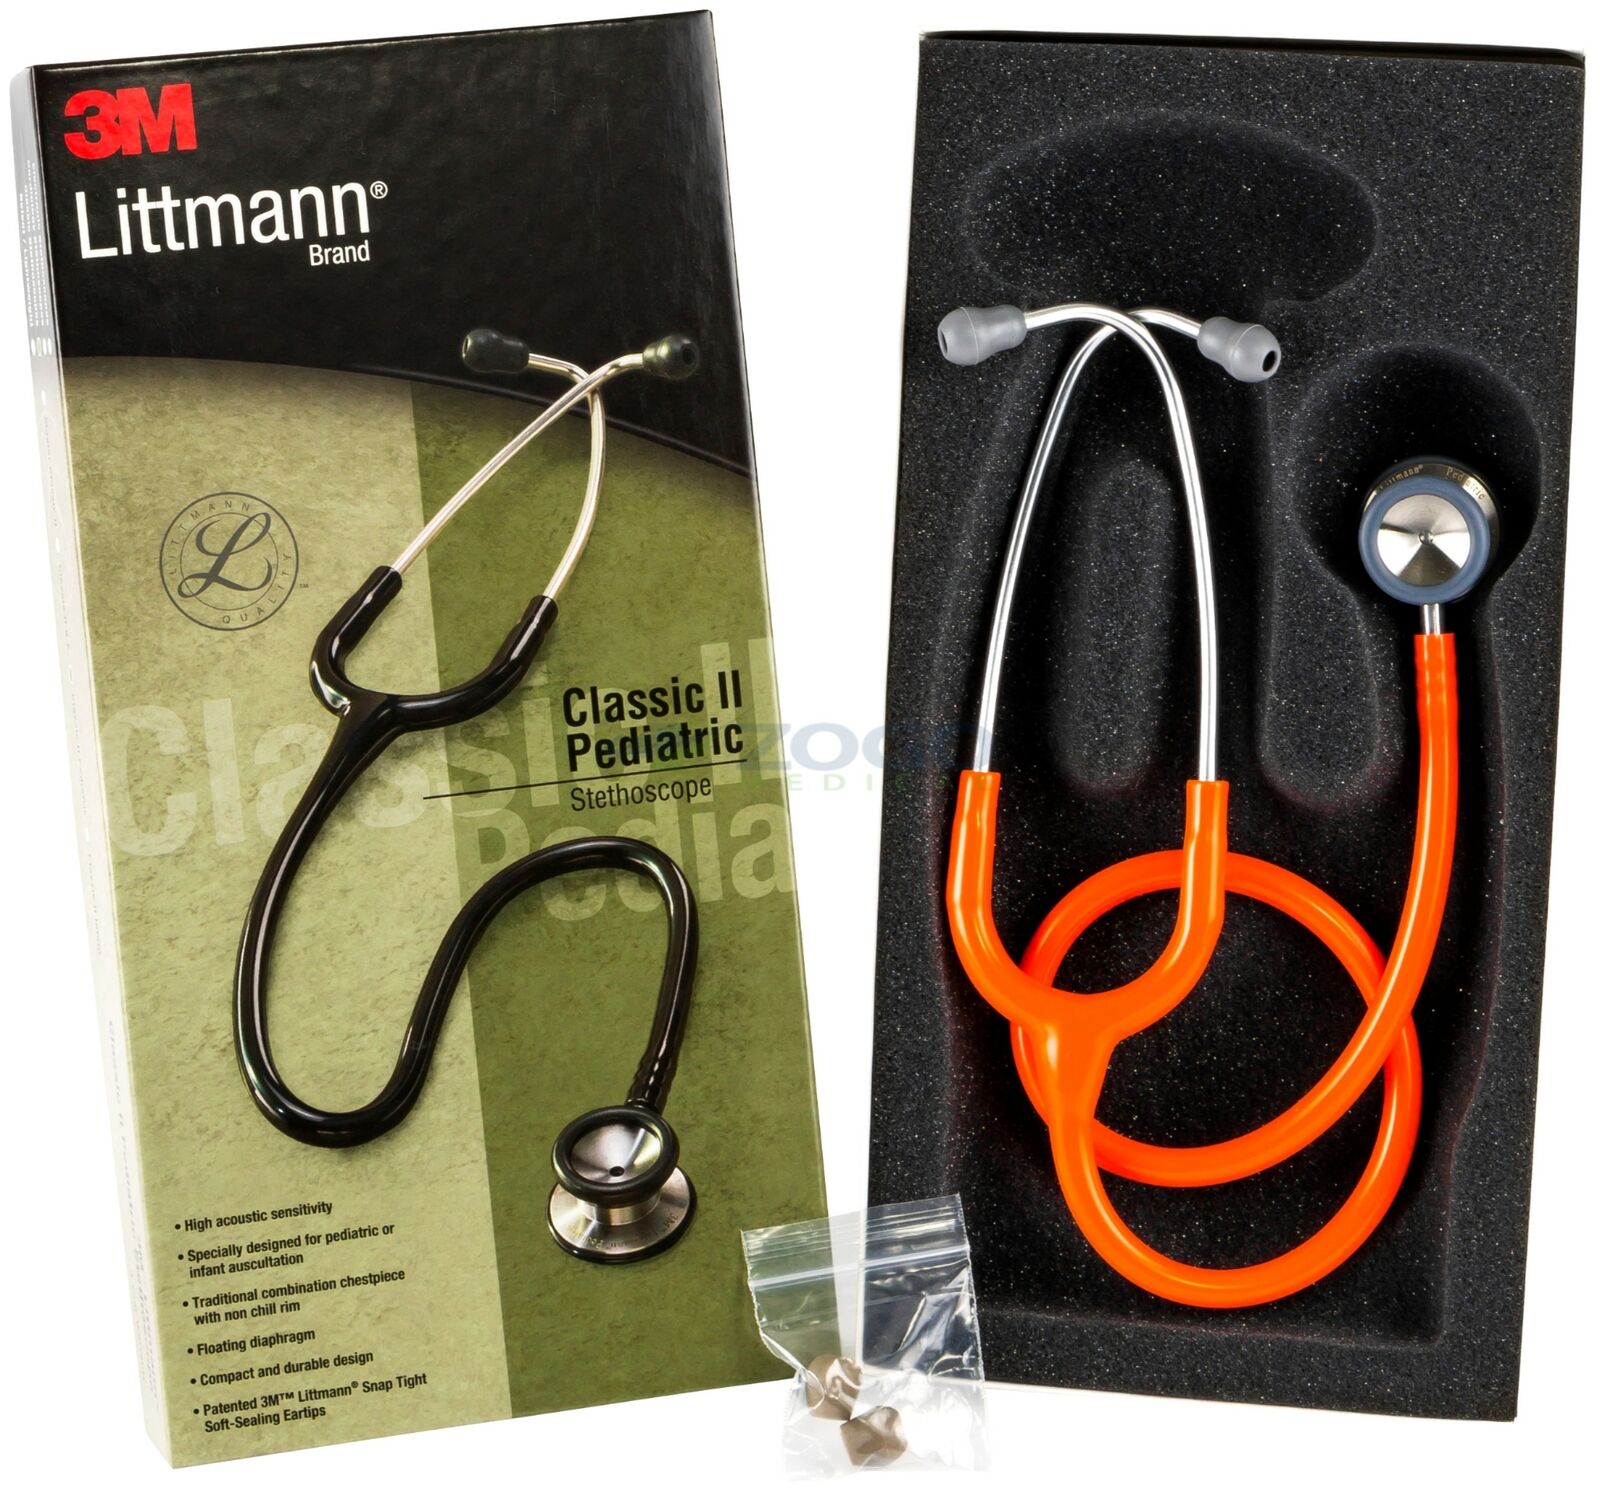 Littmann Classic II Pediatric Stethoscope